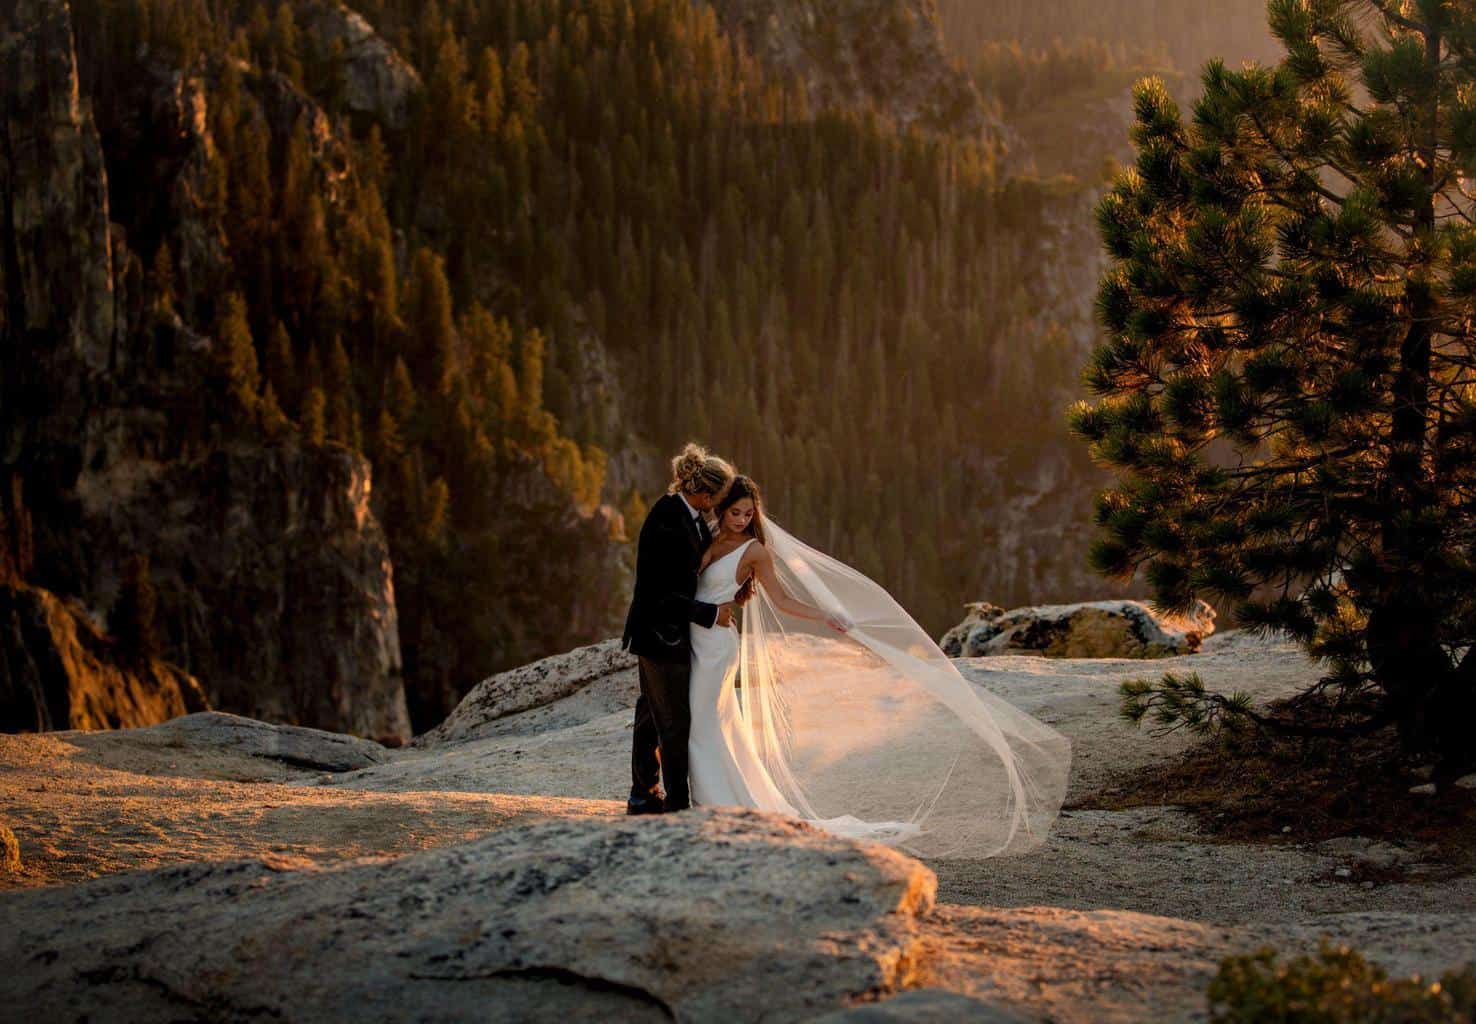 Destination Wedding: Best Locations to Have an Elopement 9